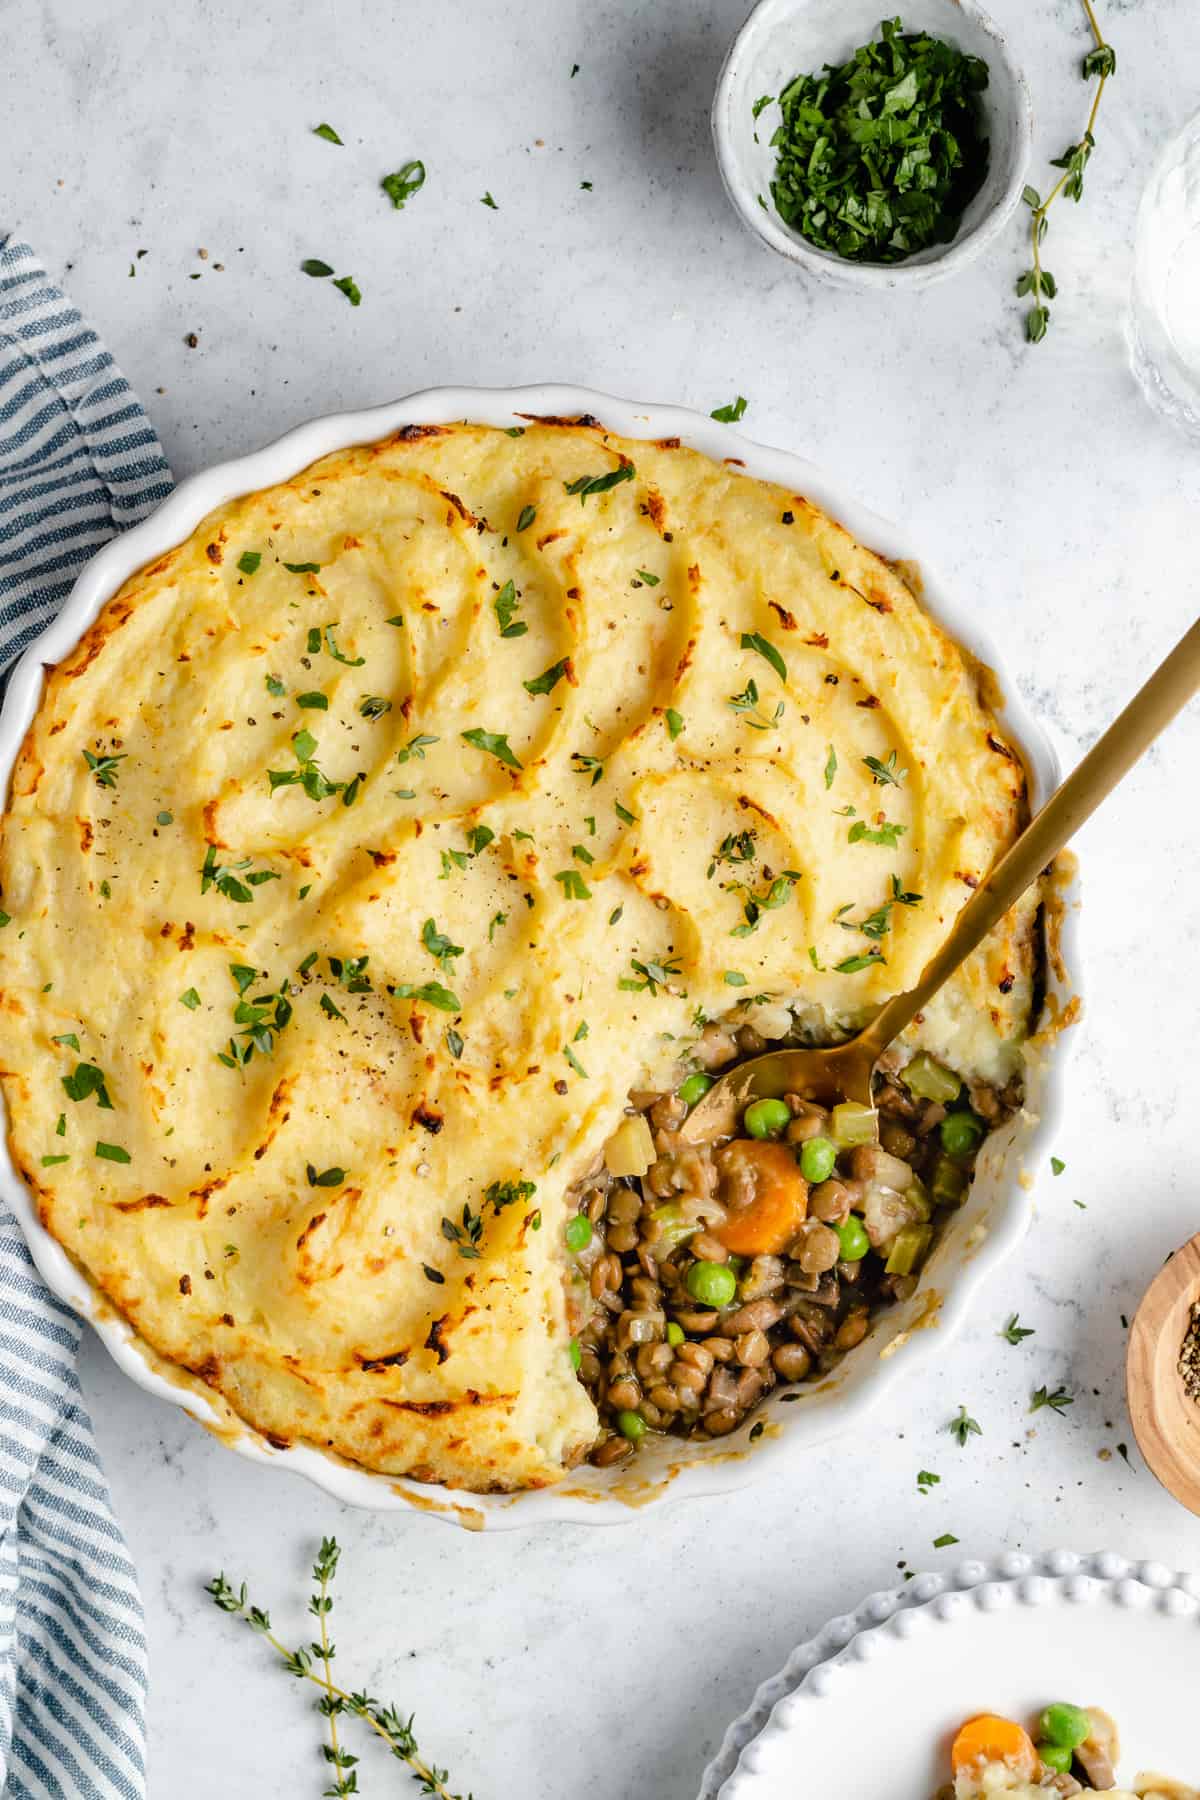 Easy Vegan Shepherd's Pie with Lentils | Jessica in the Kitchen